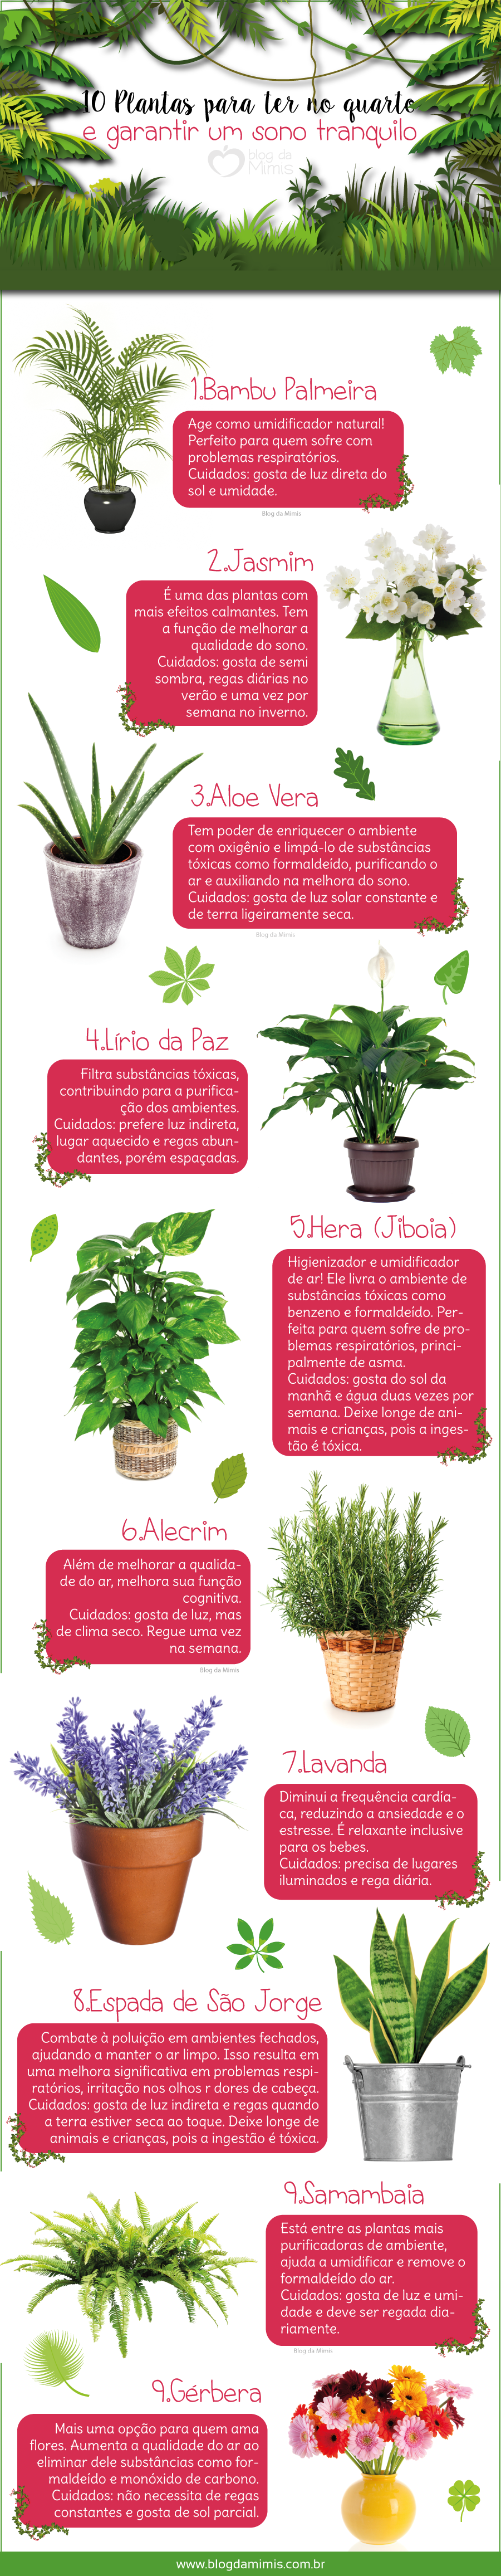 plantas-para-quarto-blog-da-mimis-michelle-franzoni-post